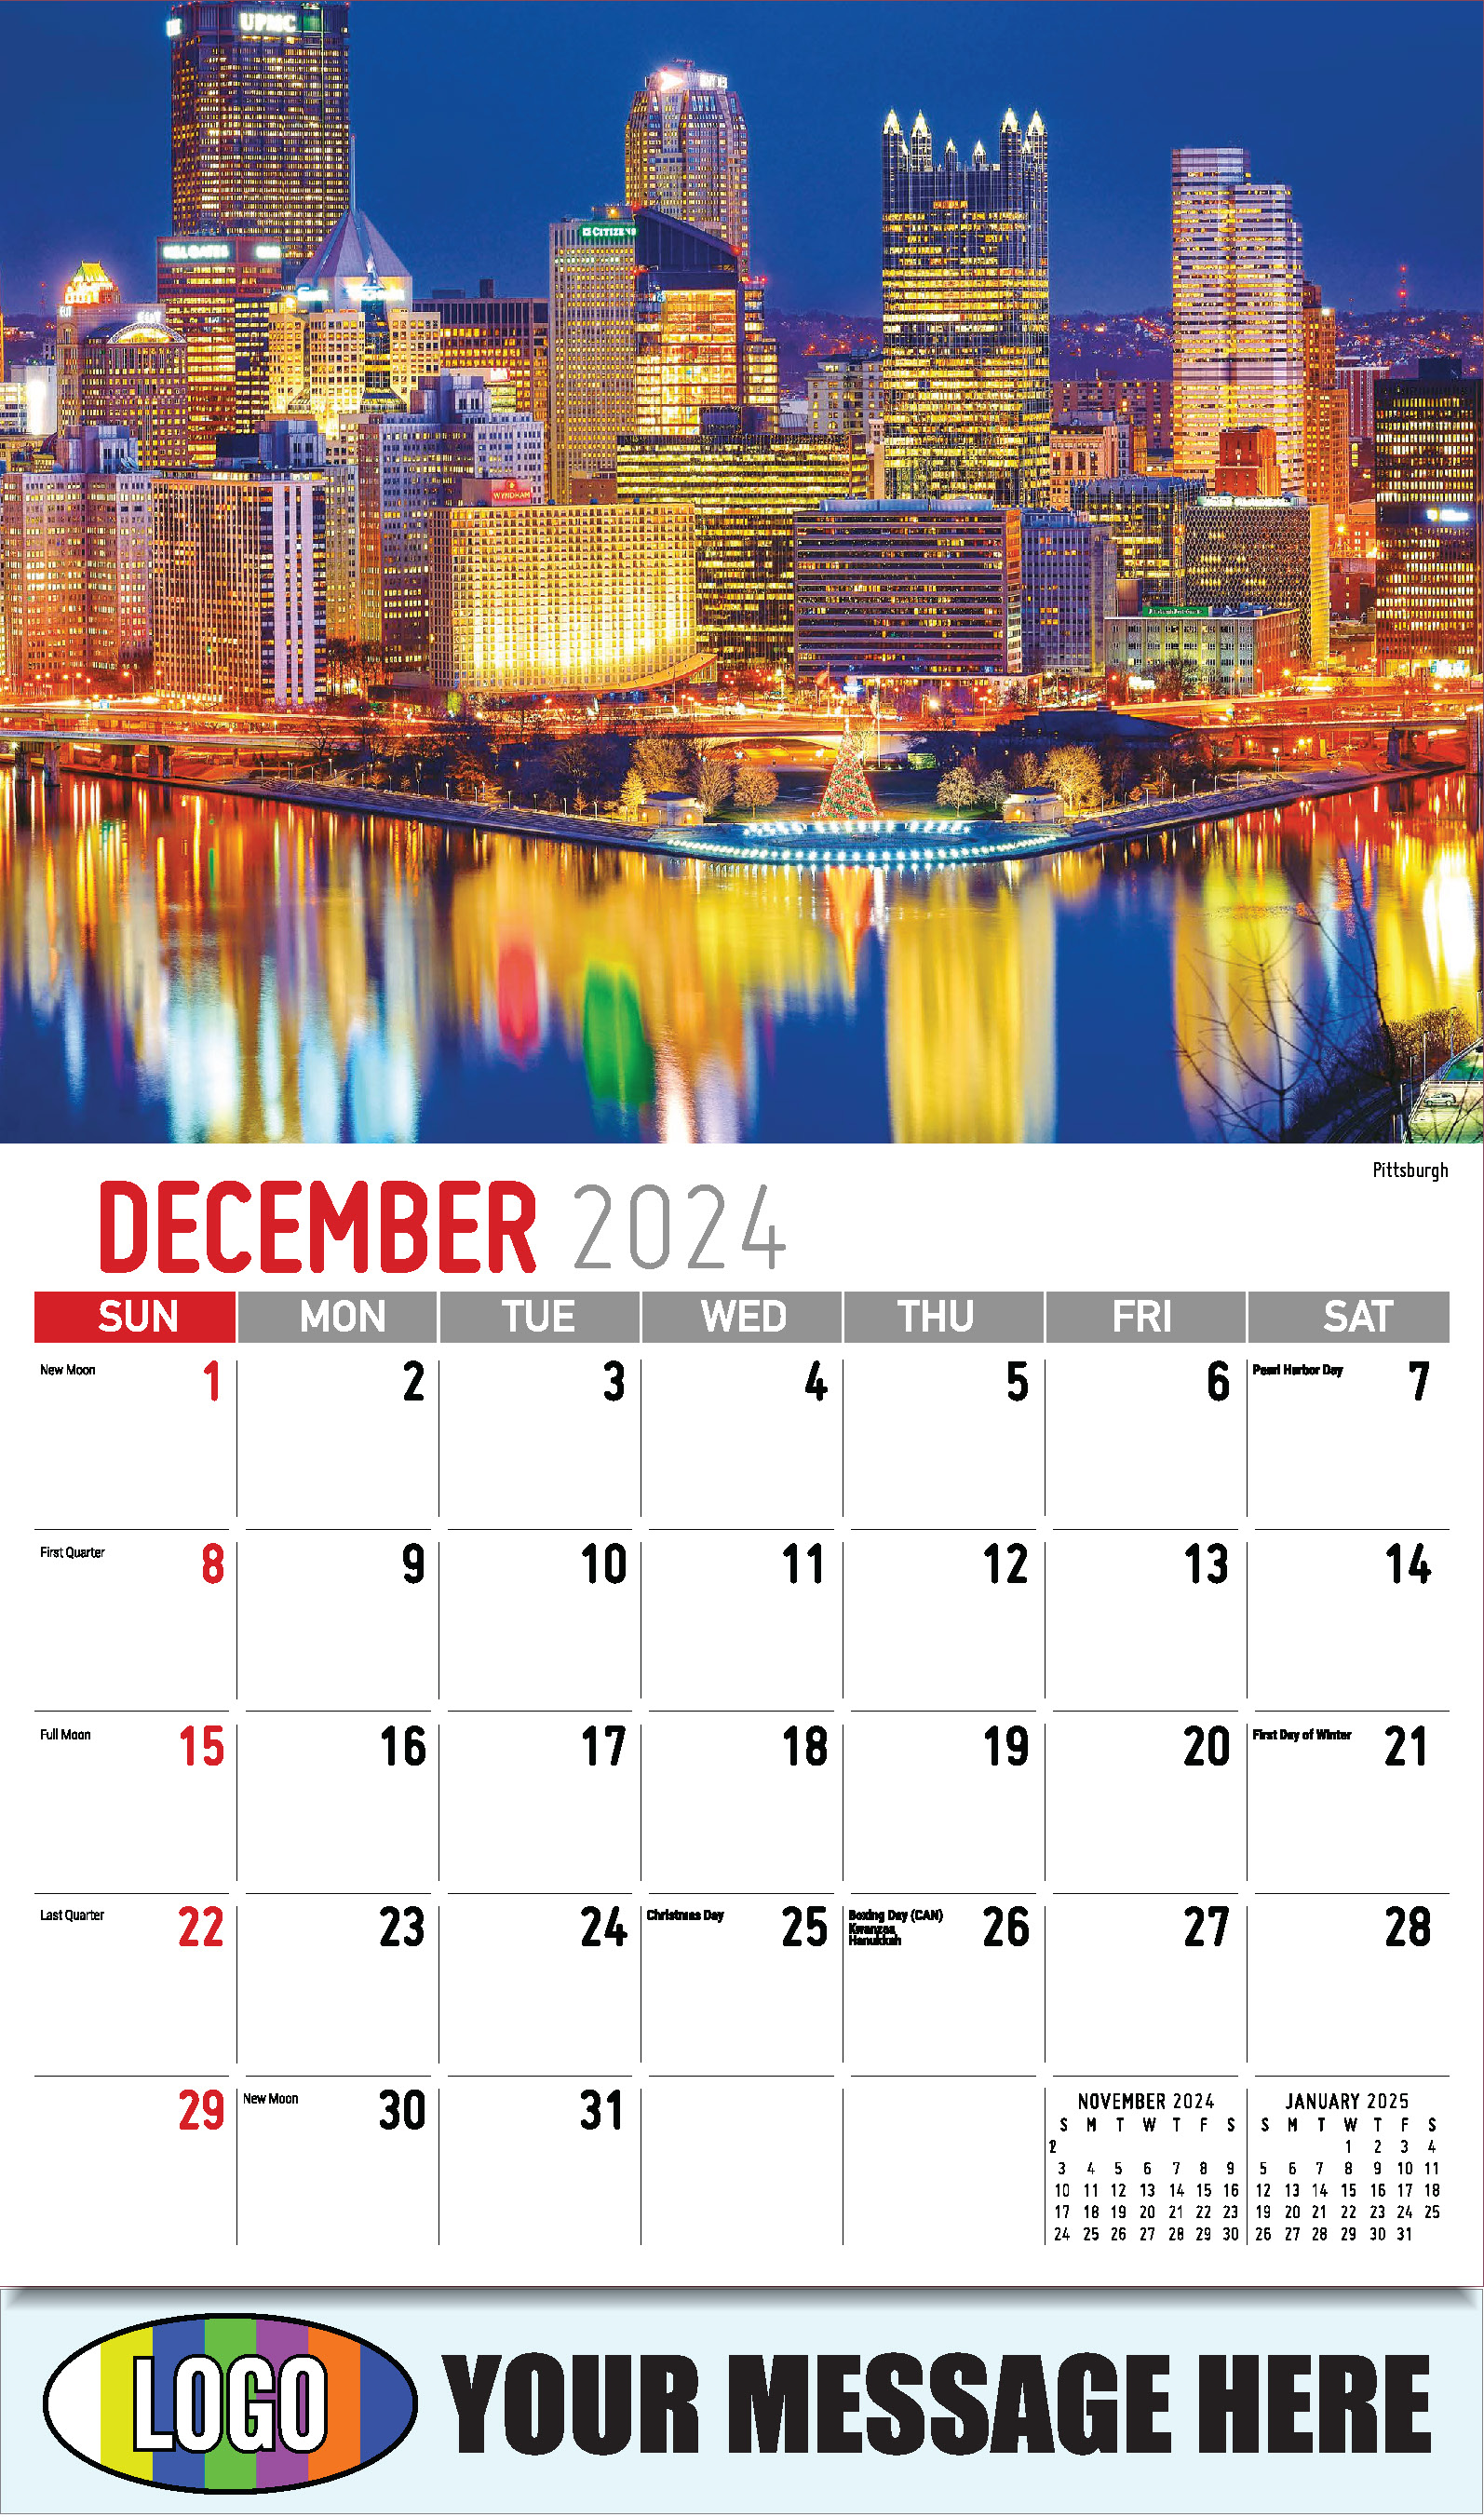 Scenes of Pennsylvania 2025 Business Promotion Calendar - December_a